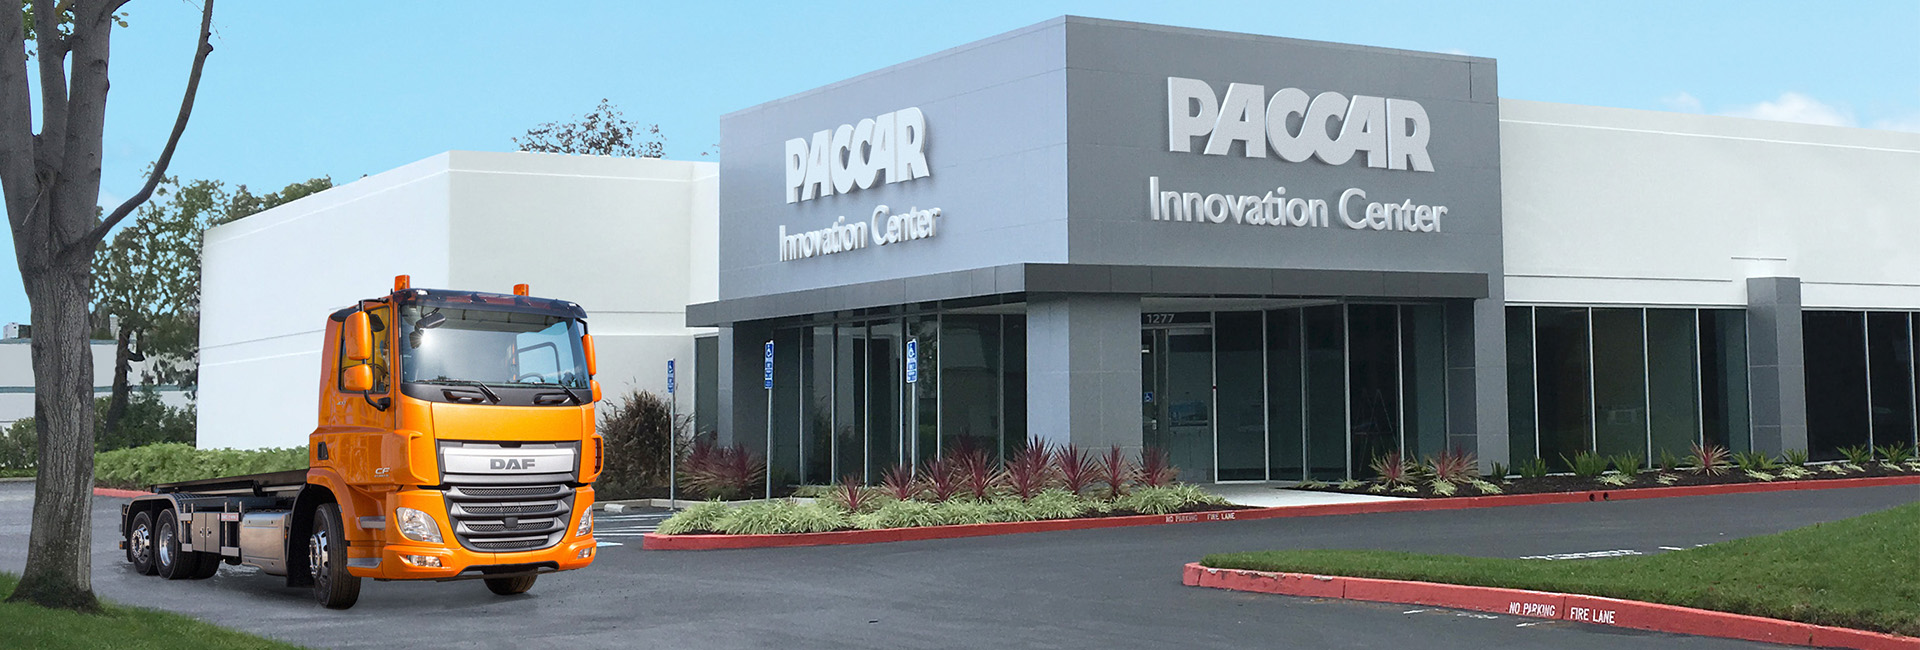 PACCAR Innovation Center PR